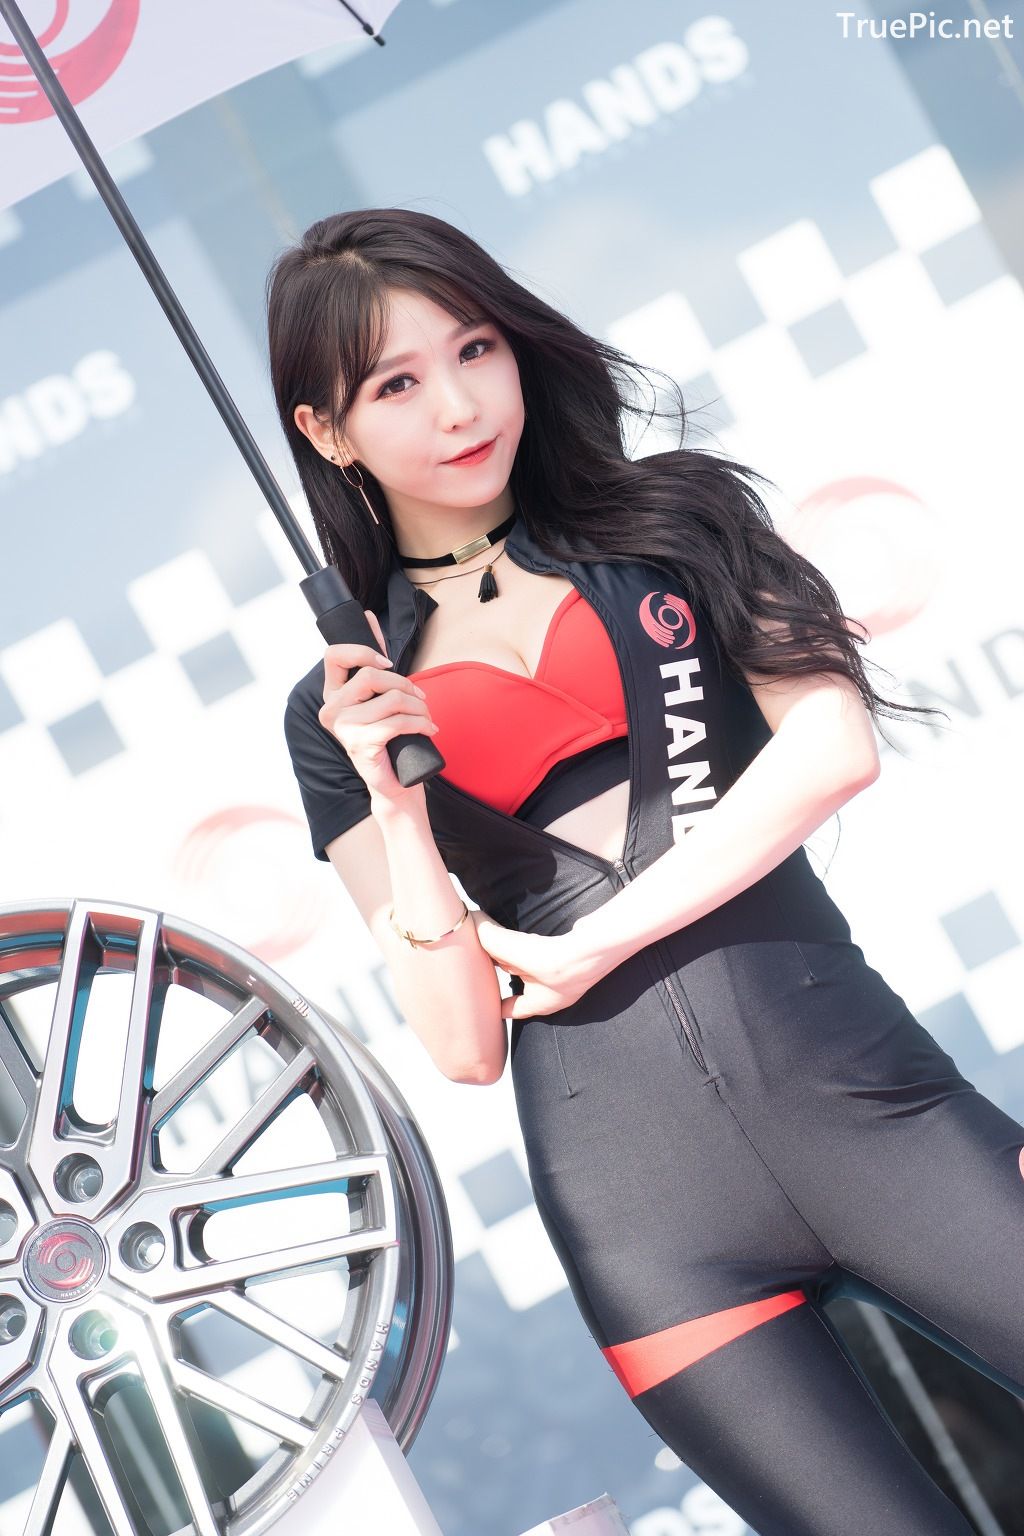 Image-Korean-Racing-Model-Lee-Eun-Hye-At-Incheon-Korea-Tuning-Festival-TruePic.net- Picture-209